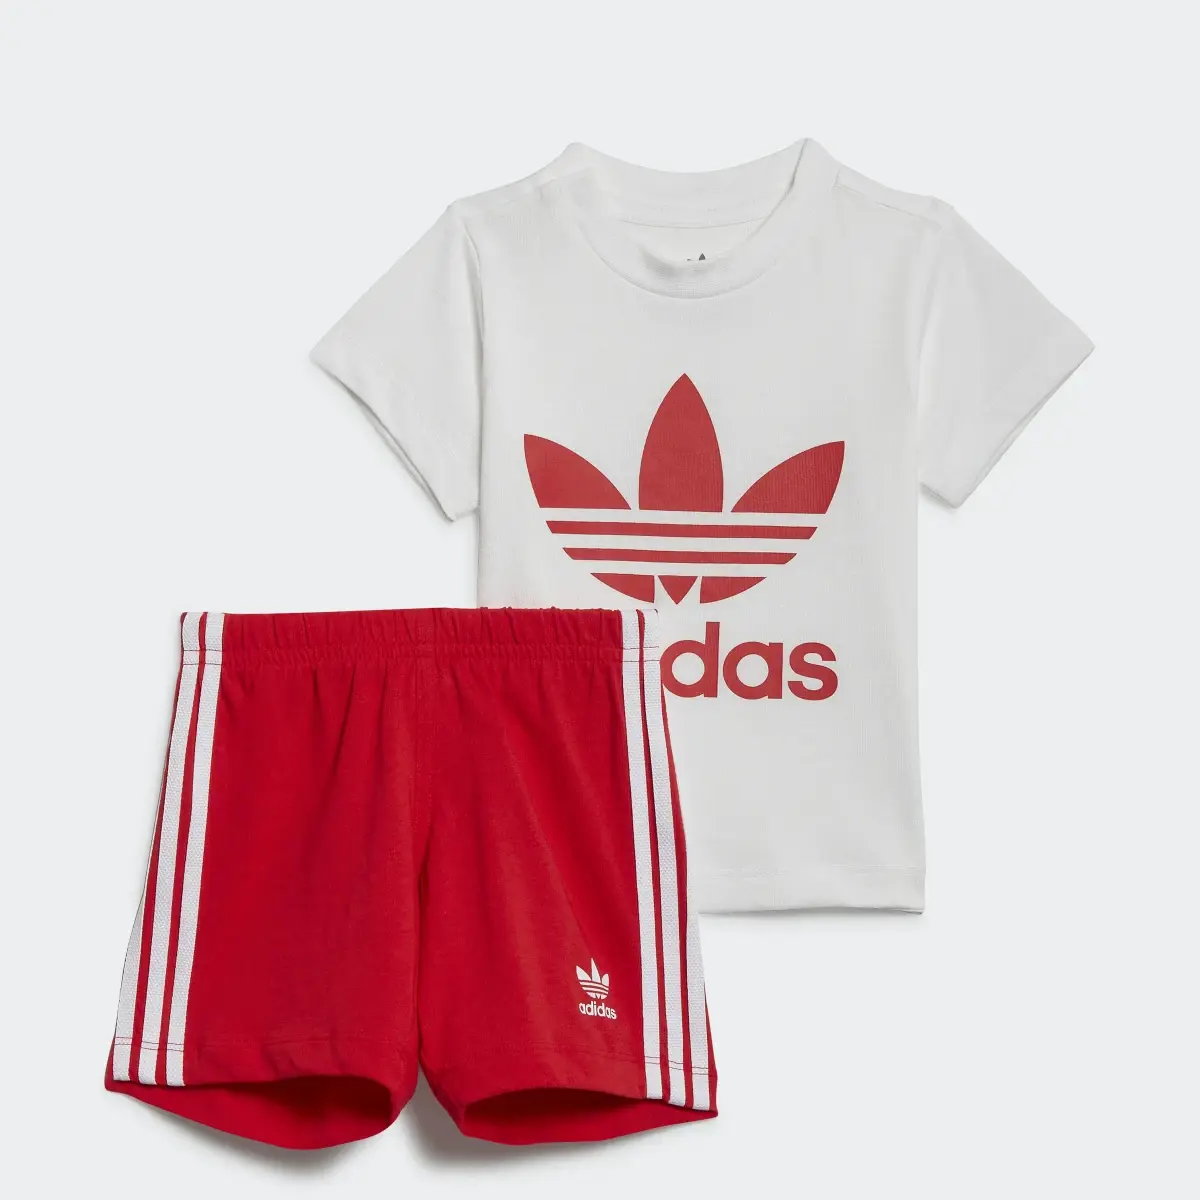 Adidas Trefoil Shorts Tee Set. 1